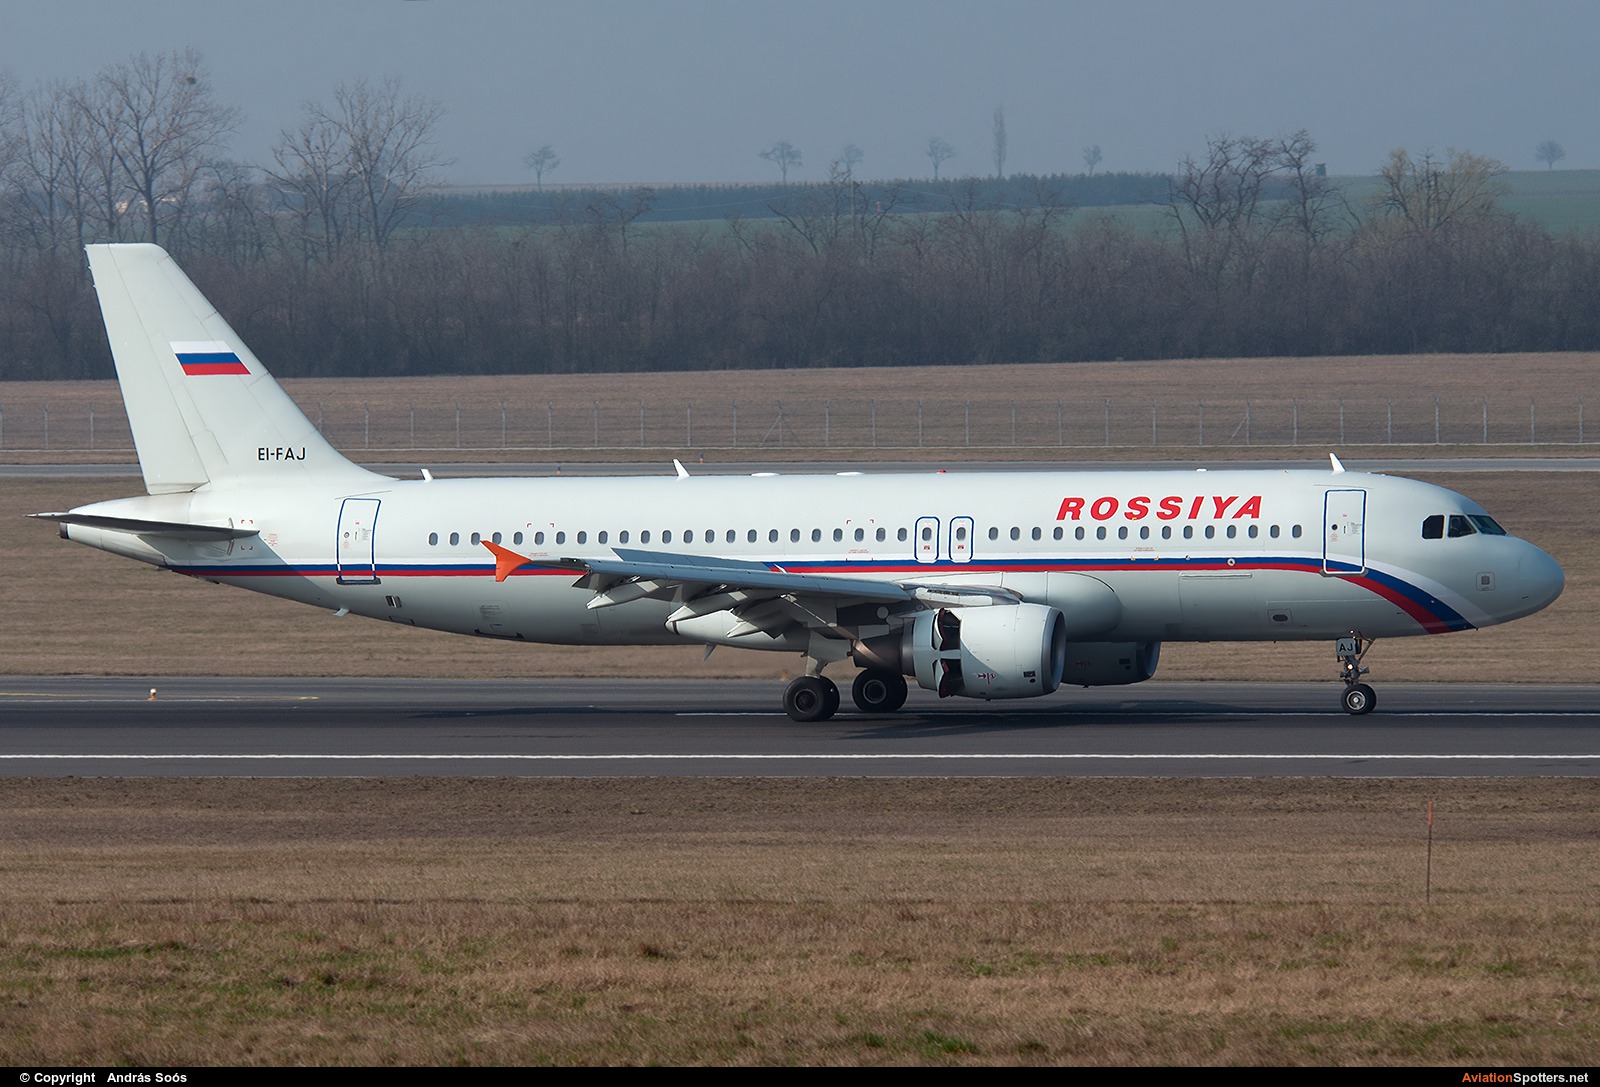 Rossiya Airlines  -  A320-214  (EI-FAJ) By András Soós (sas1965)